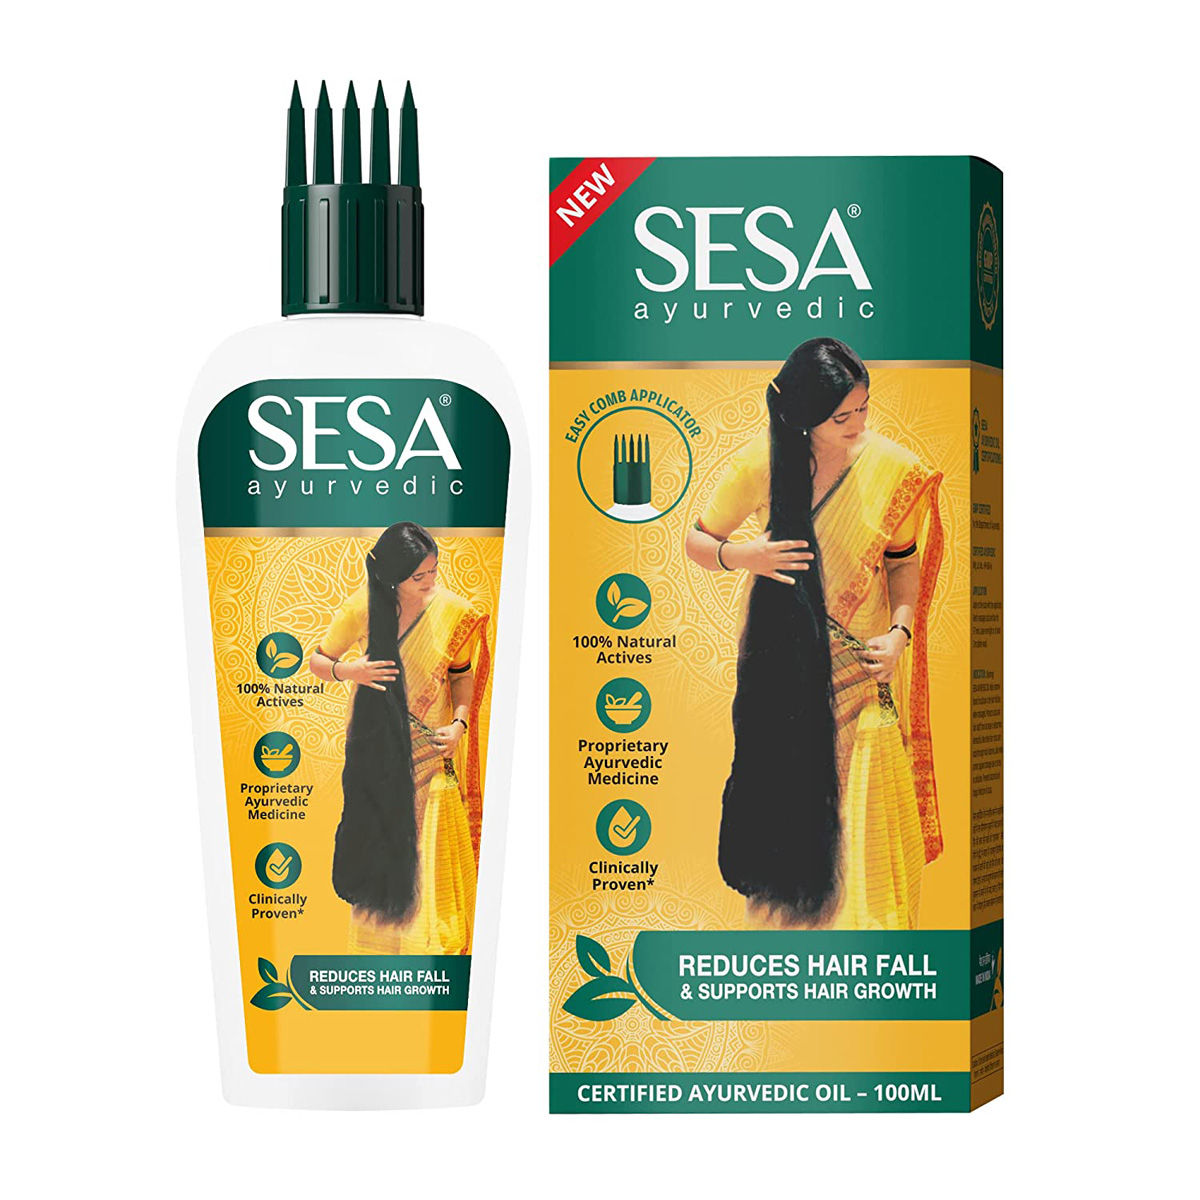 Sesa Ayurvedic Hair Oil, 100 ml Price, Uses, Side Effects, Composition -  Apollo Pharmacy